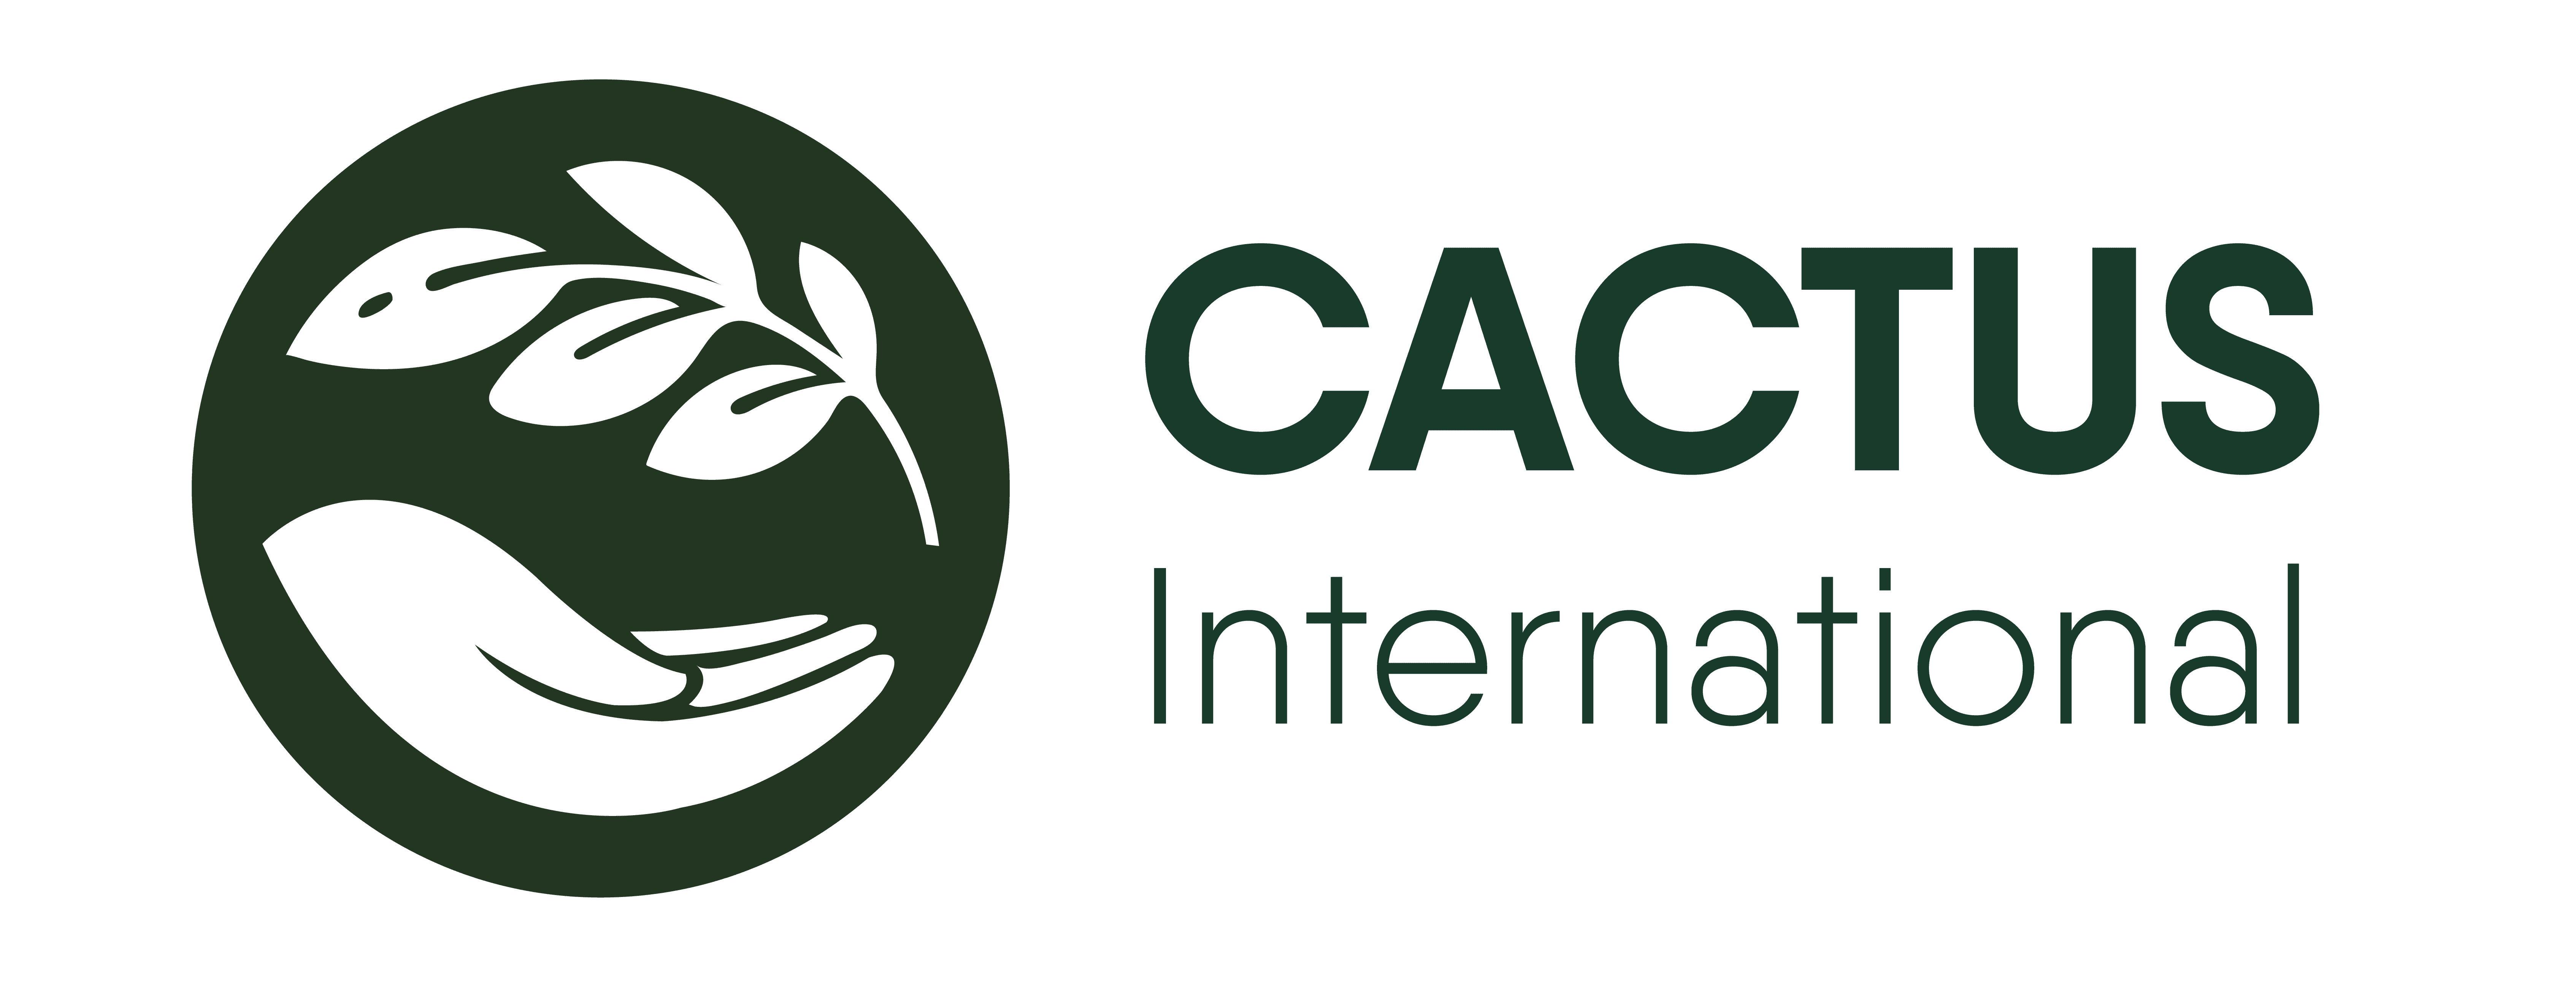 cactus international logo